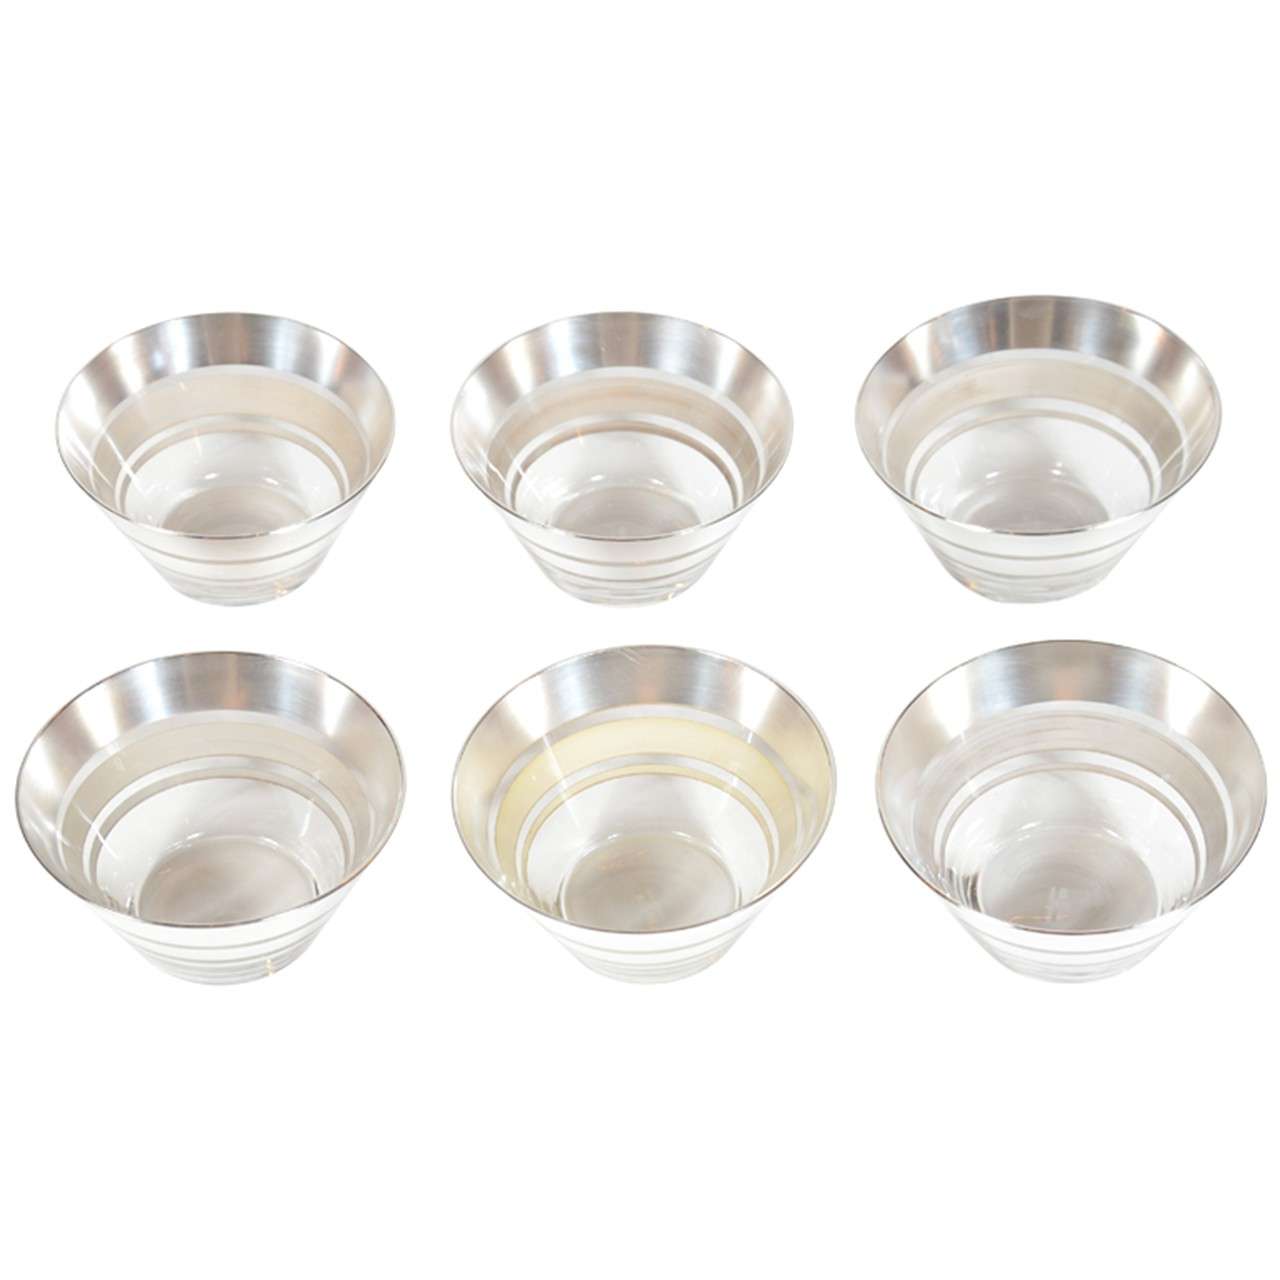 Set of Twelve Art Deco Glass Dessert Bowls with Concentric Sterling Silver Bands